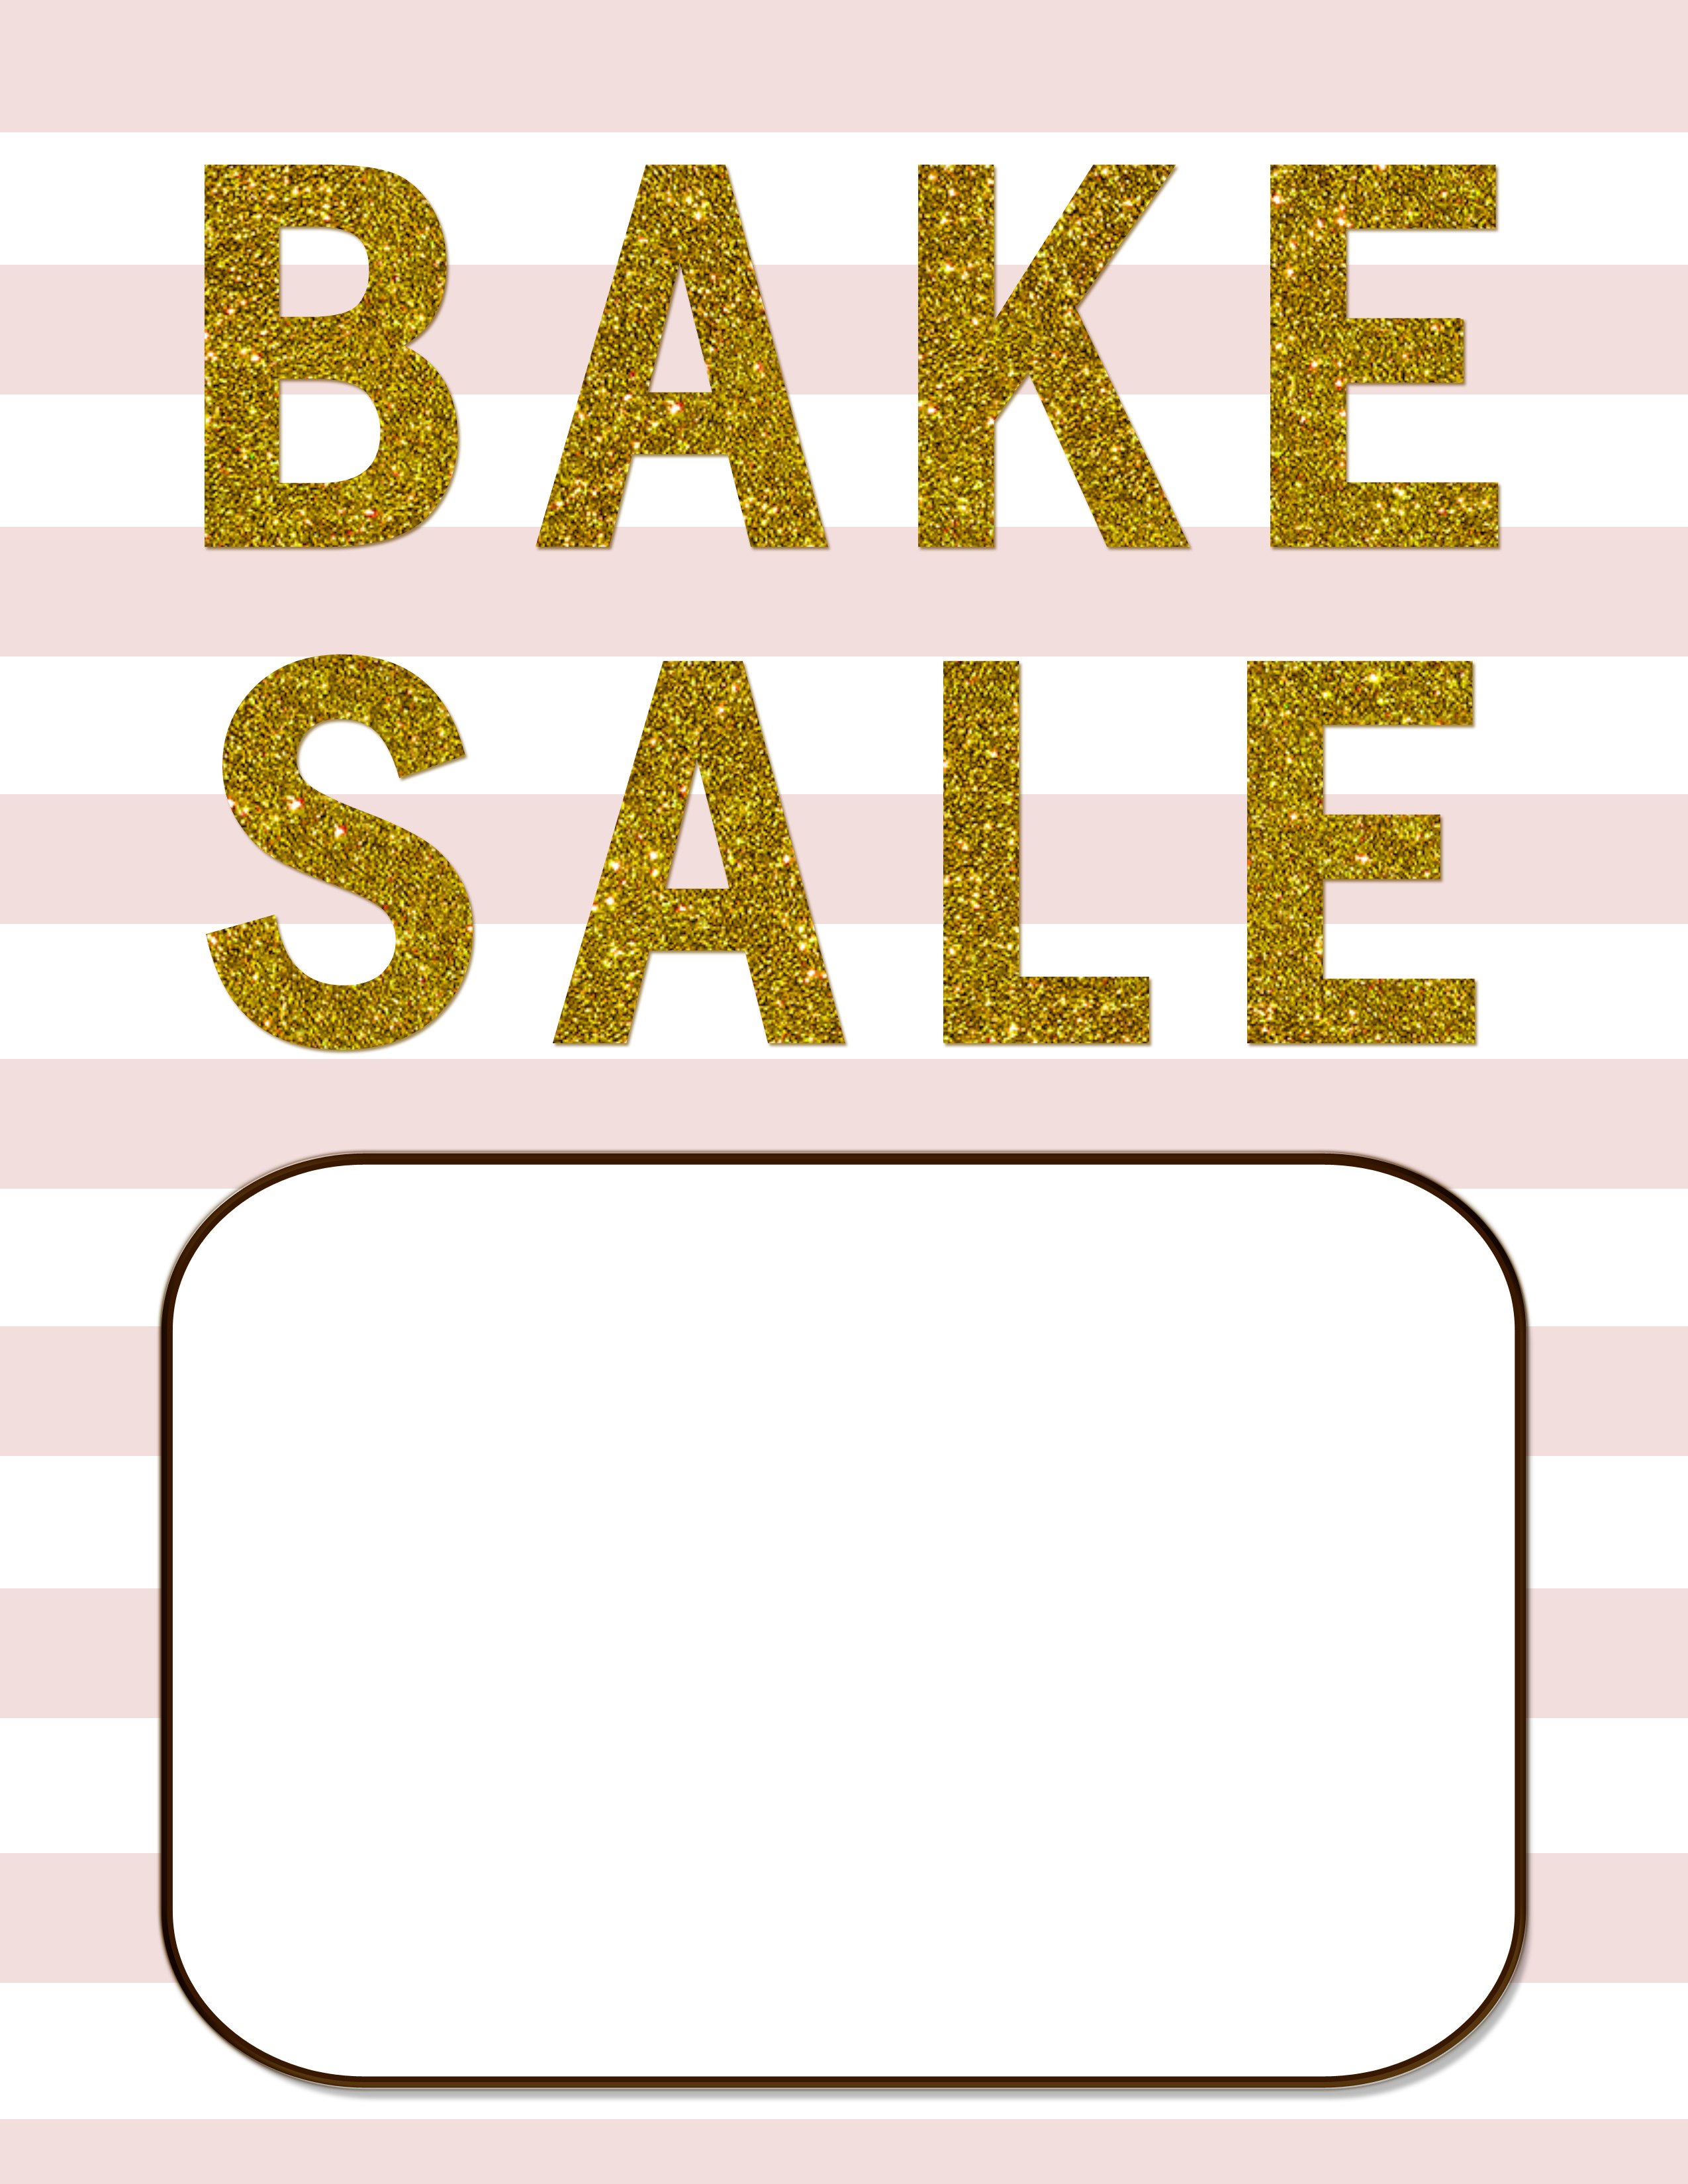 Blush Pink and Gold Glitter Bake Sale Flyer - Bake Sale Flyers - Free ...